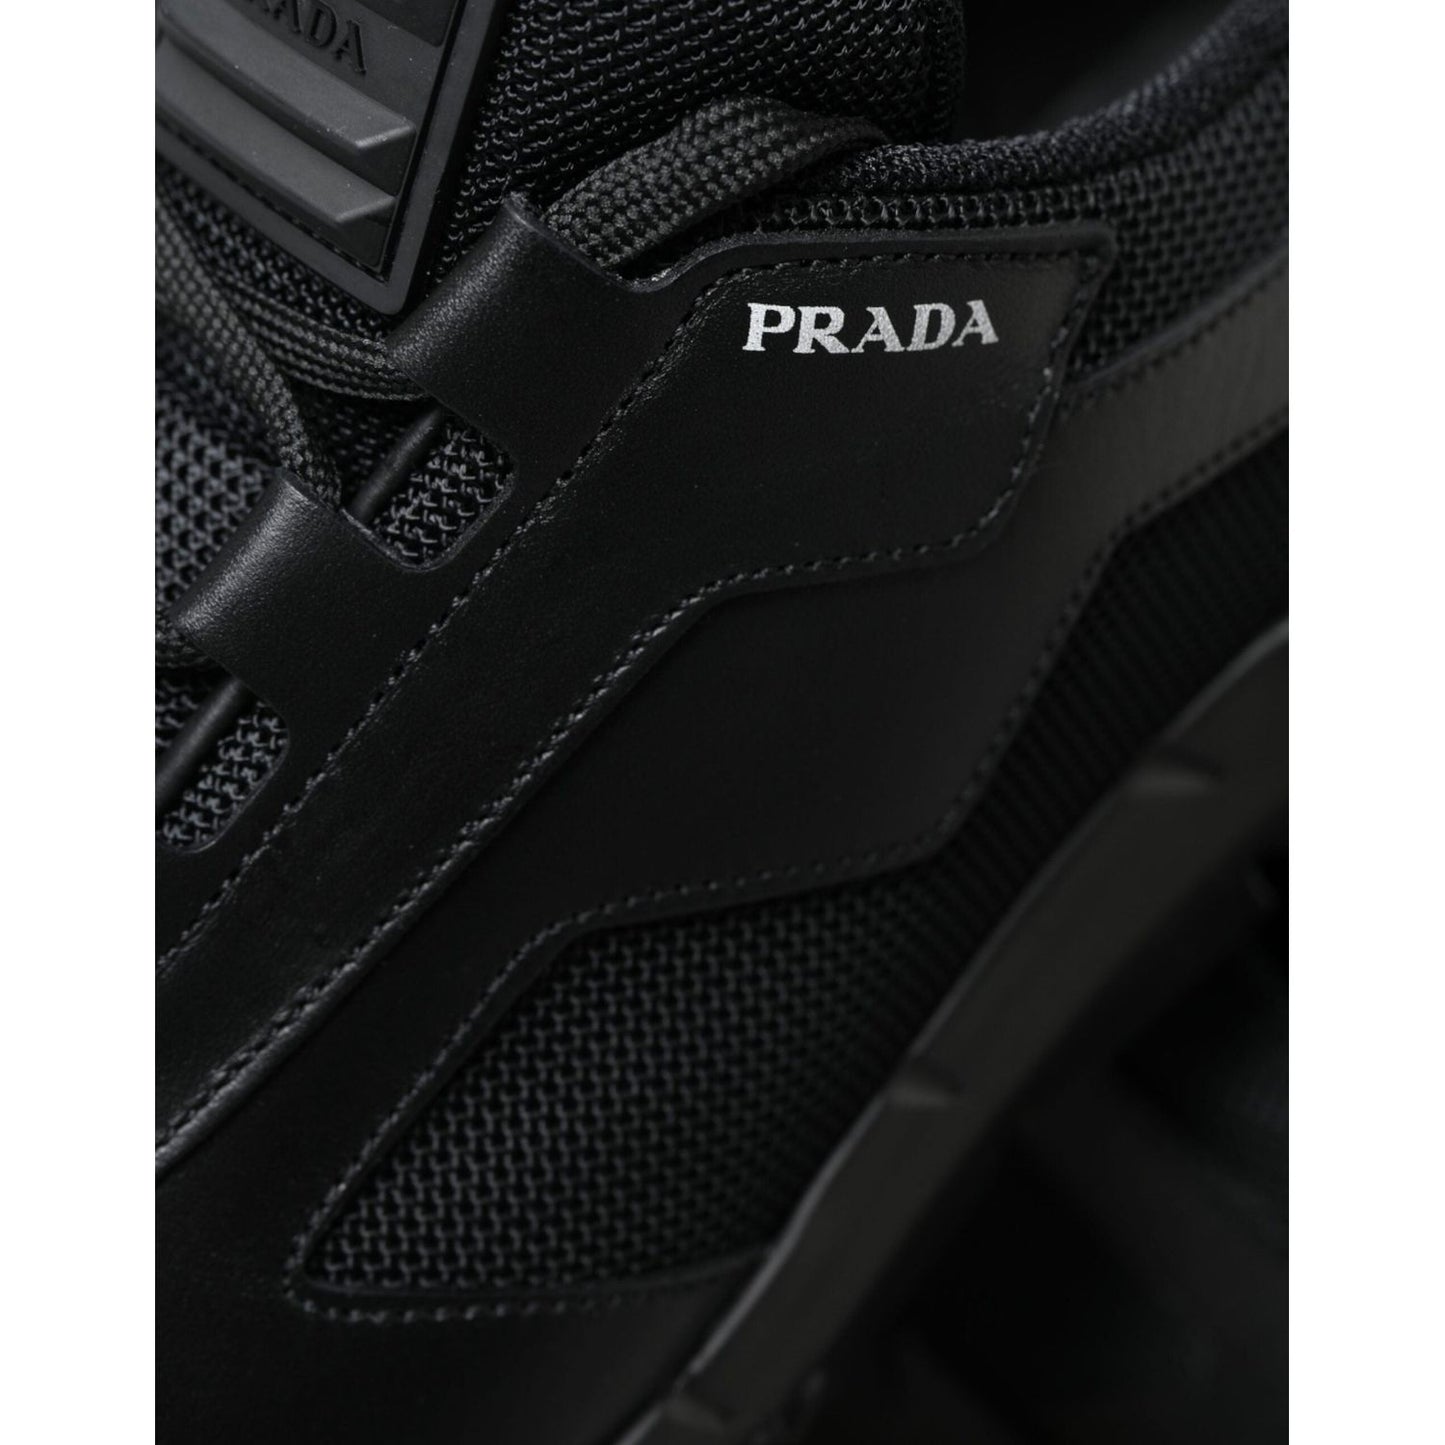 Prada Sleek Low Top Leather Sneakers in Timeless Black black-mesh-panel-low-top-twist-trainers-sneakers-shoes 465A4096-BG-scaled-ea0218b9-01a.jpg